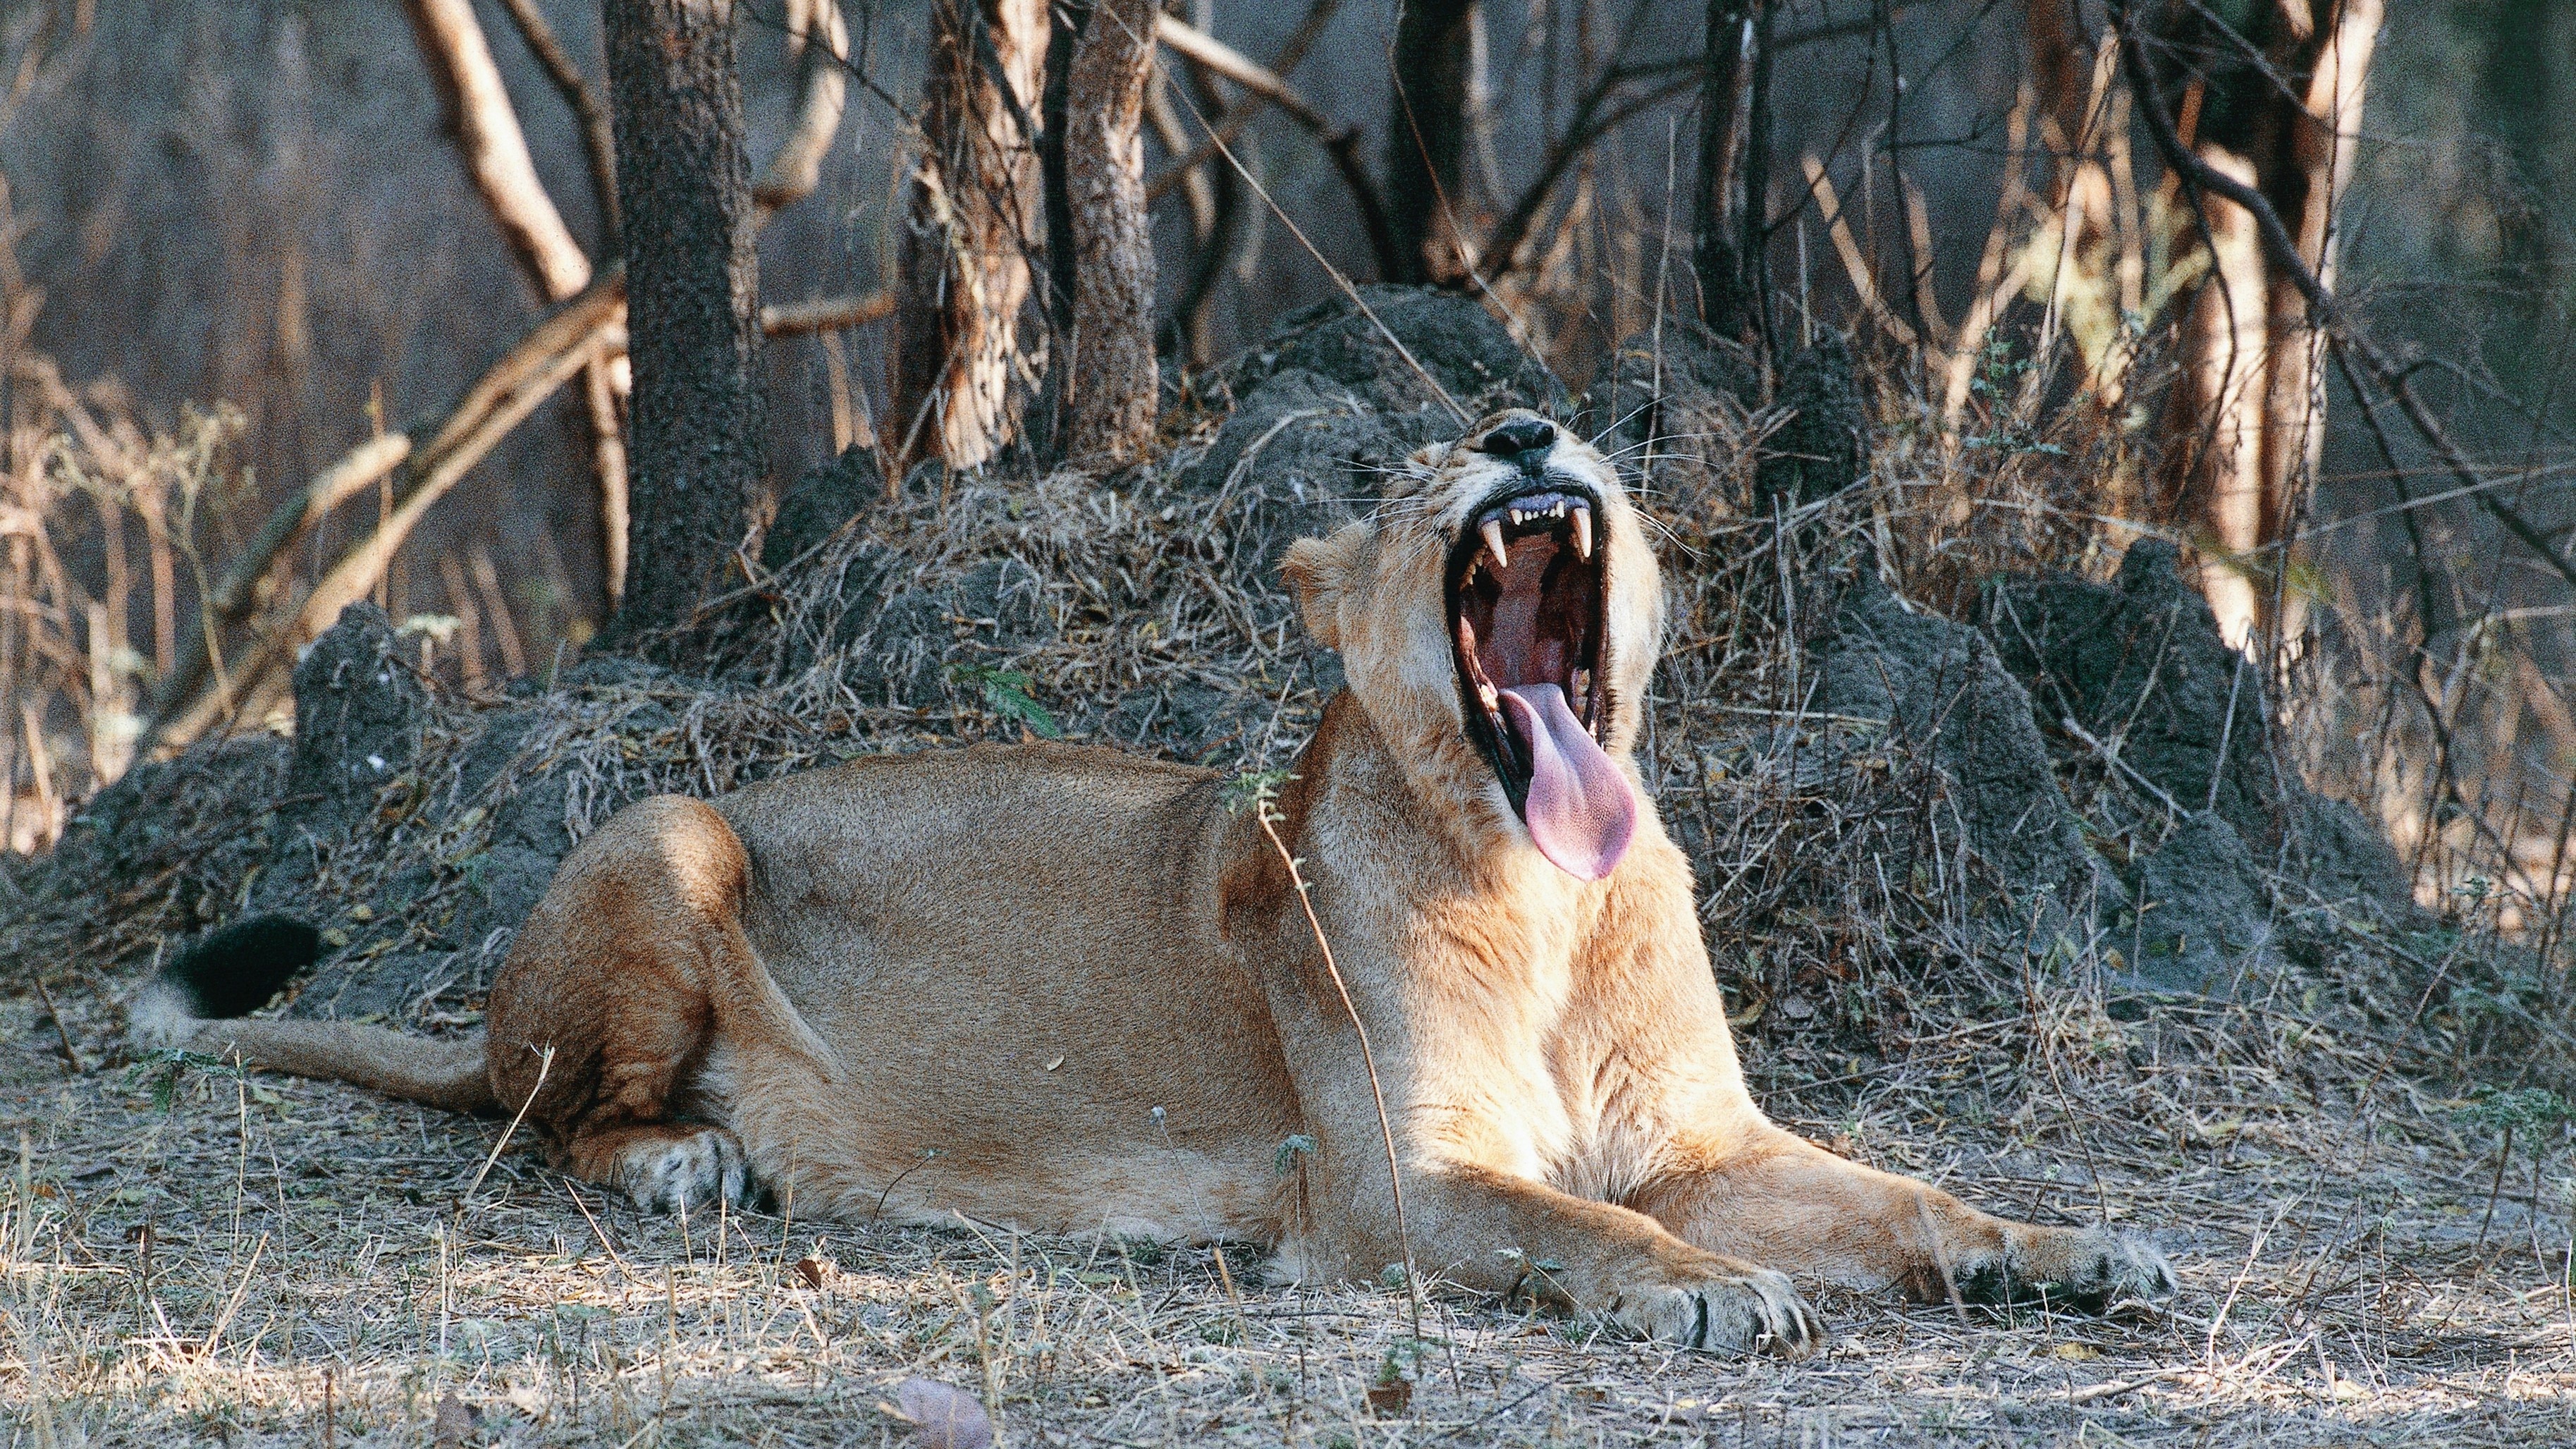 Asiatic lions in India